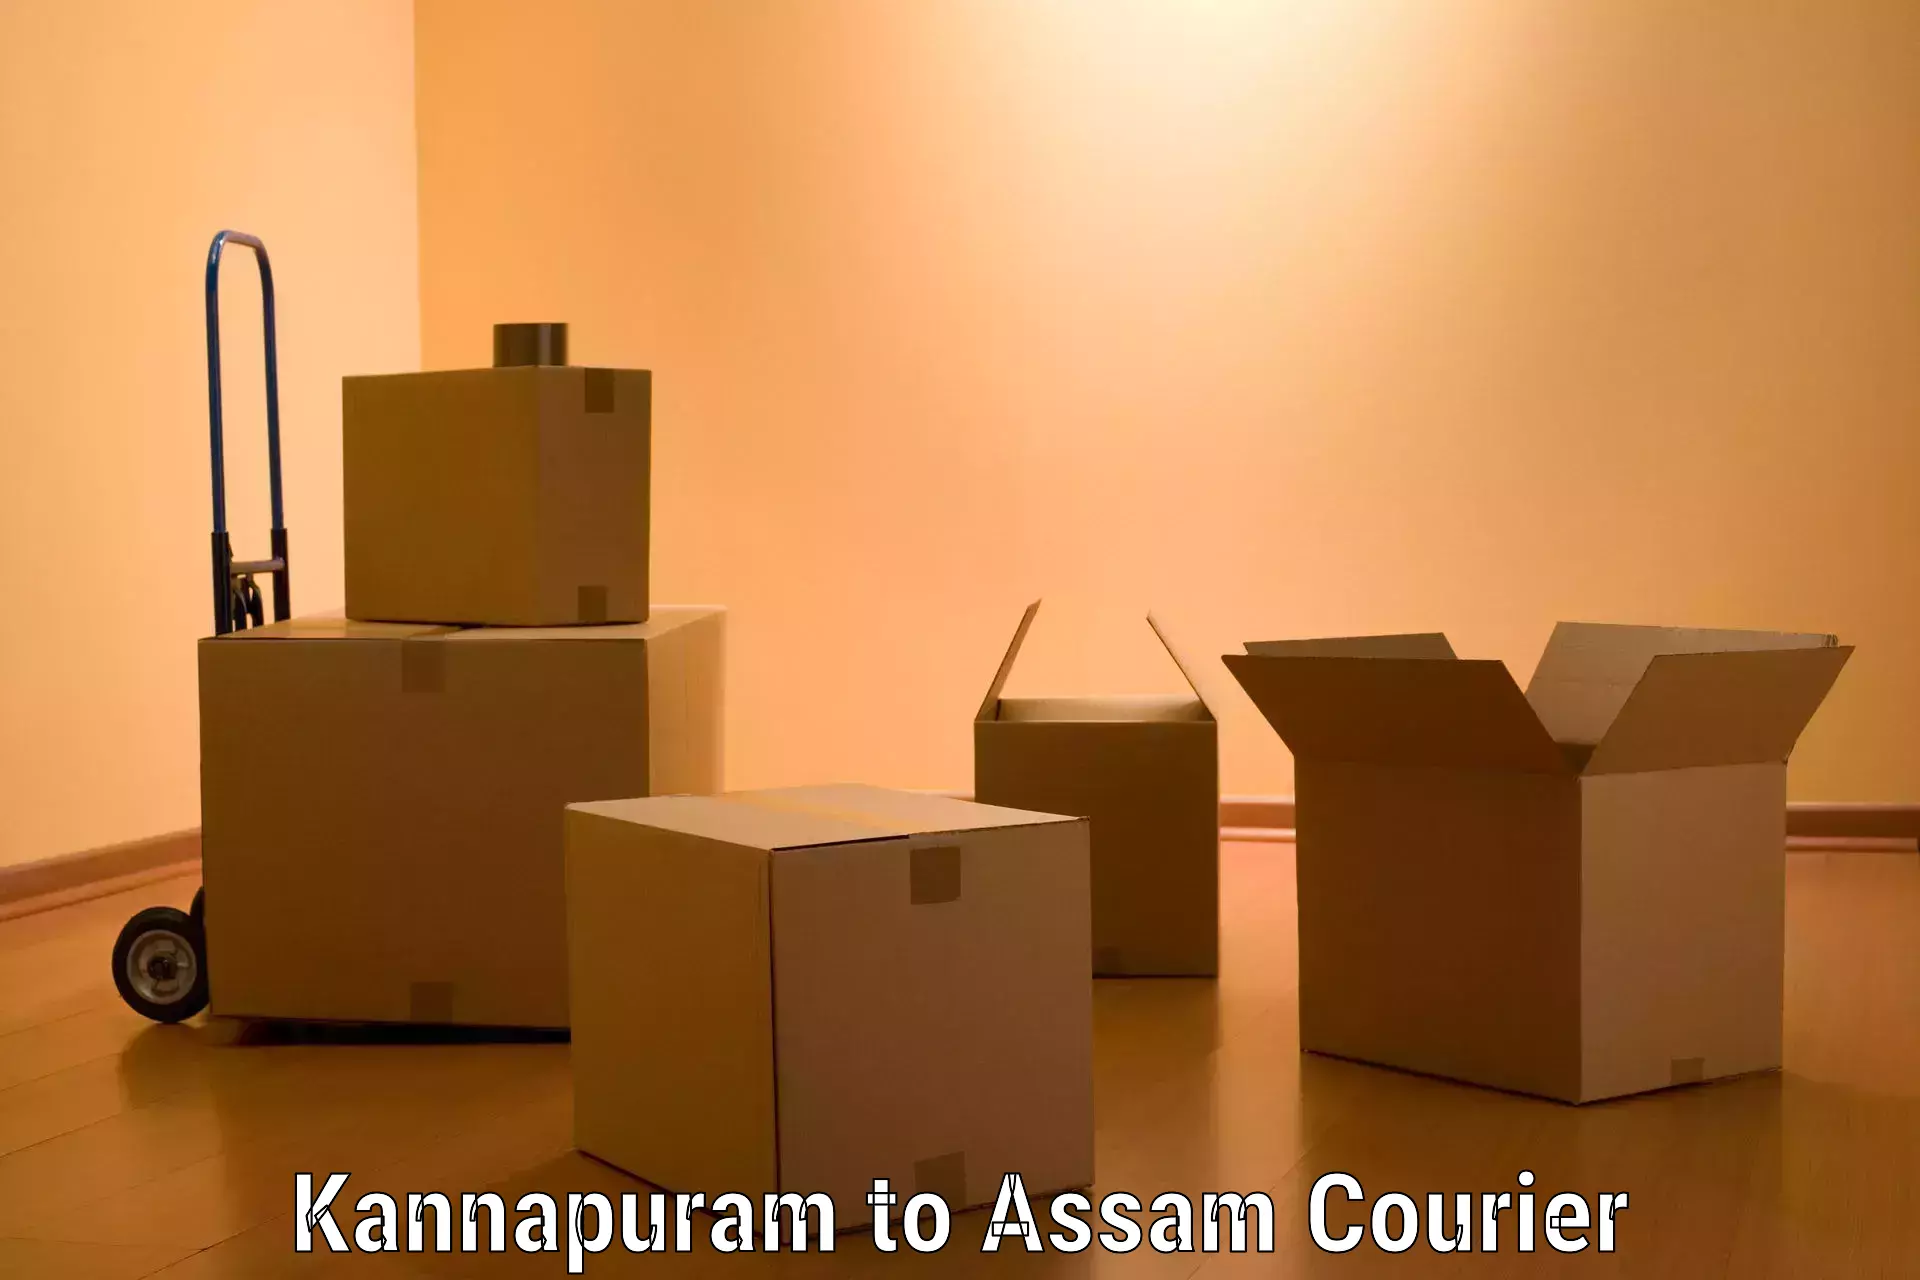 Professional moving company Kannapuram to Assam